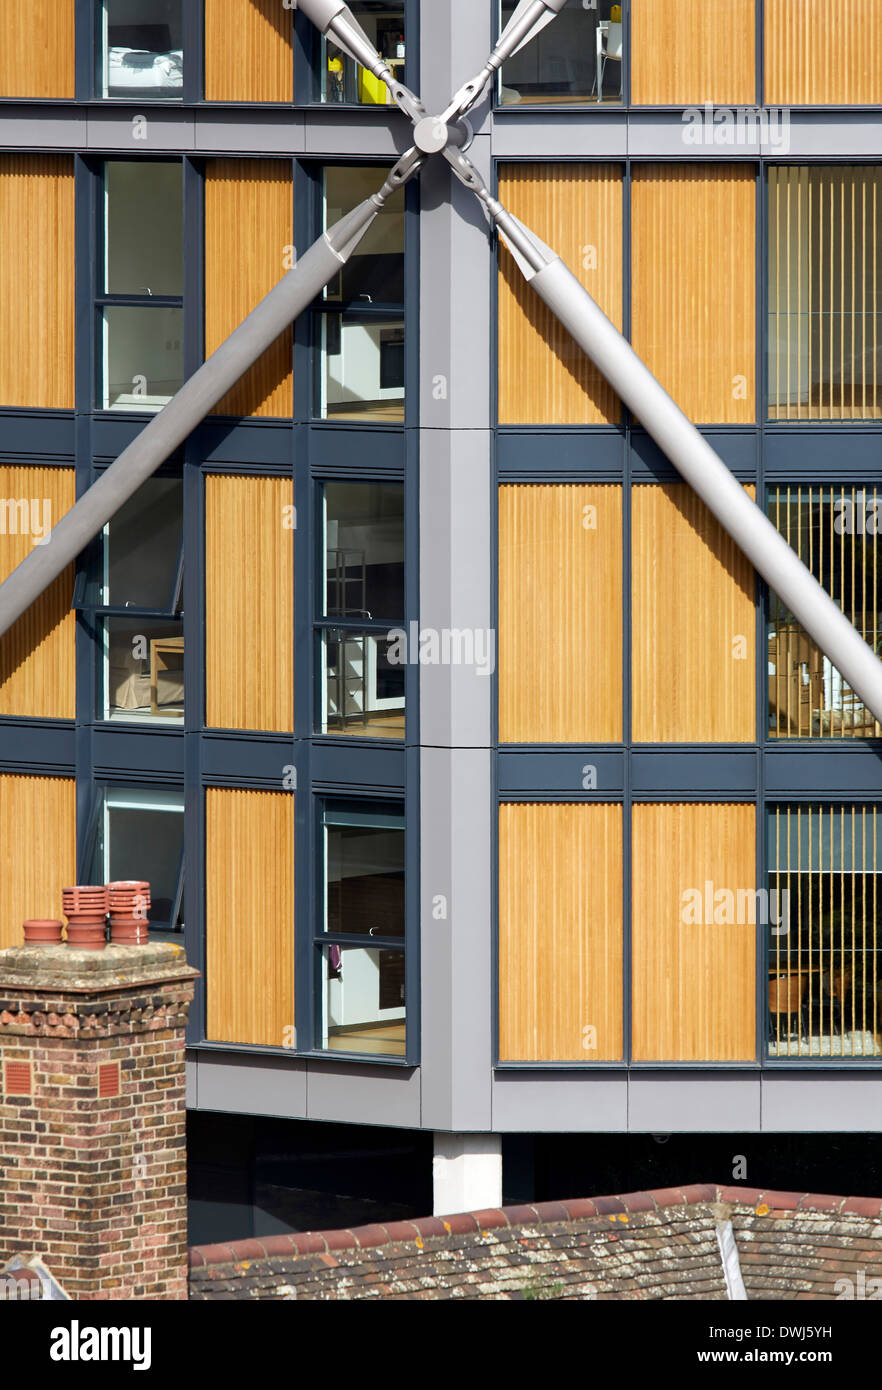 NEO Bankside, London, United Kingdom. Architect: Rogers Stirk Harbour + Partners, 2013. Exterior detail. Stock Photo